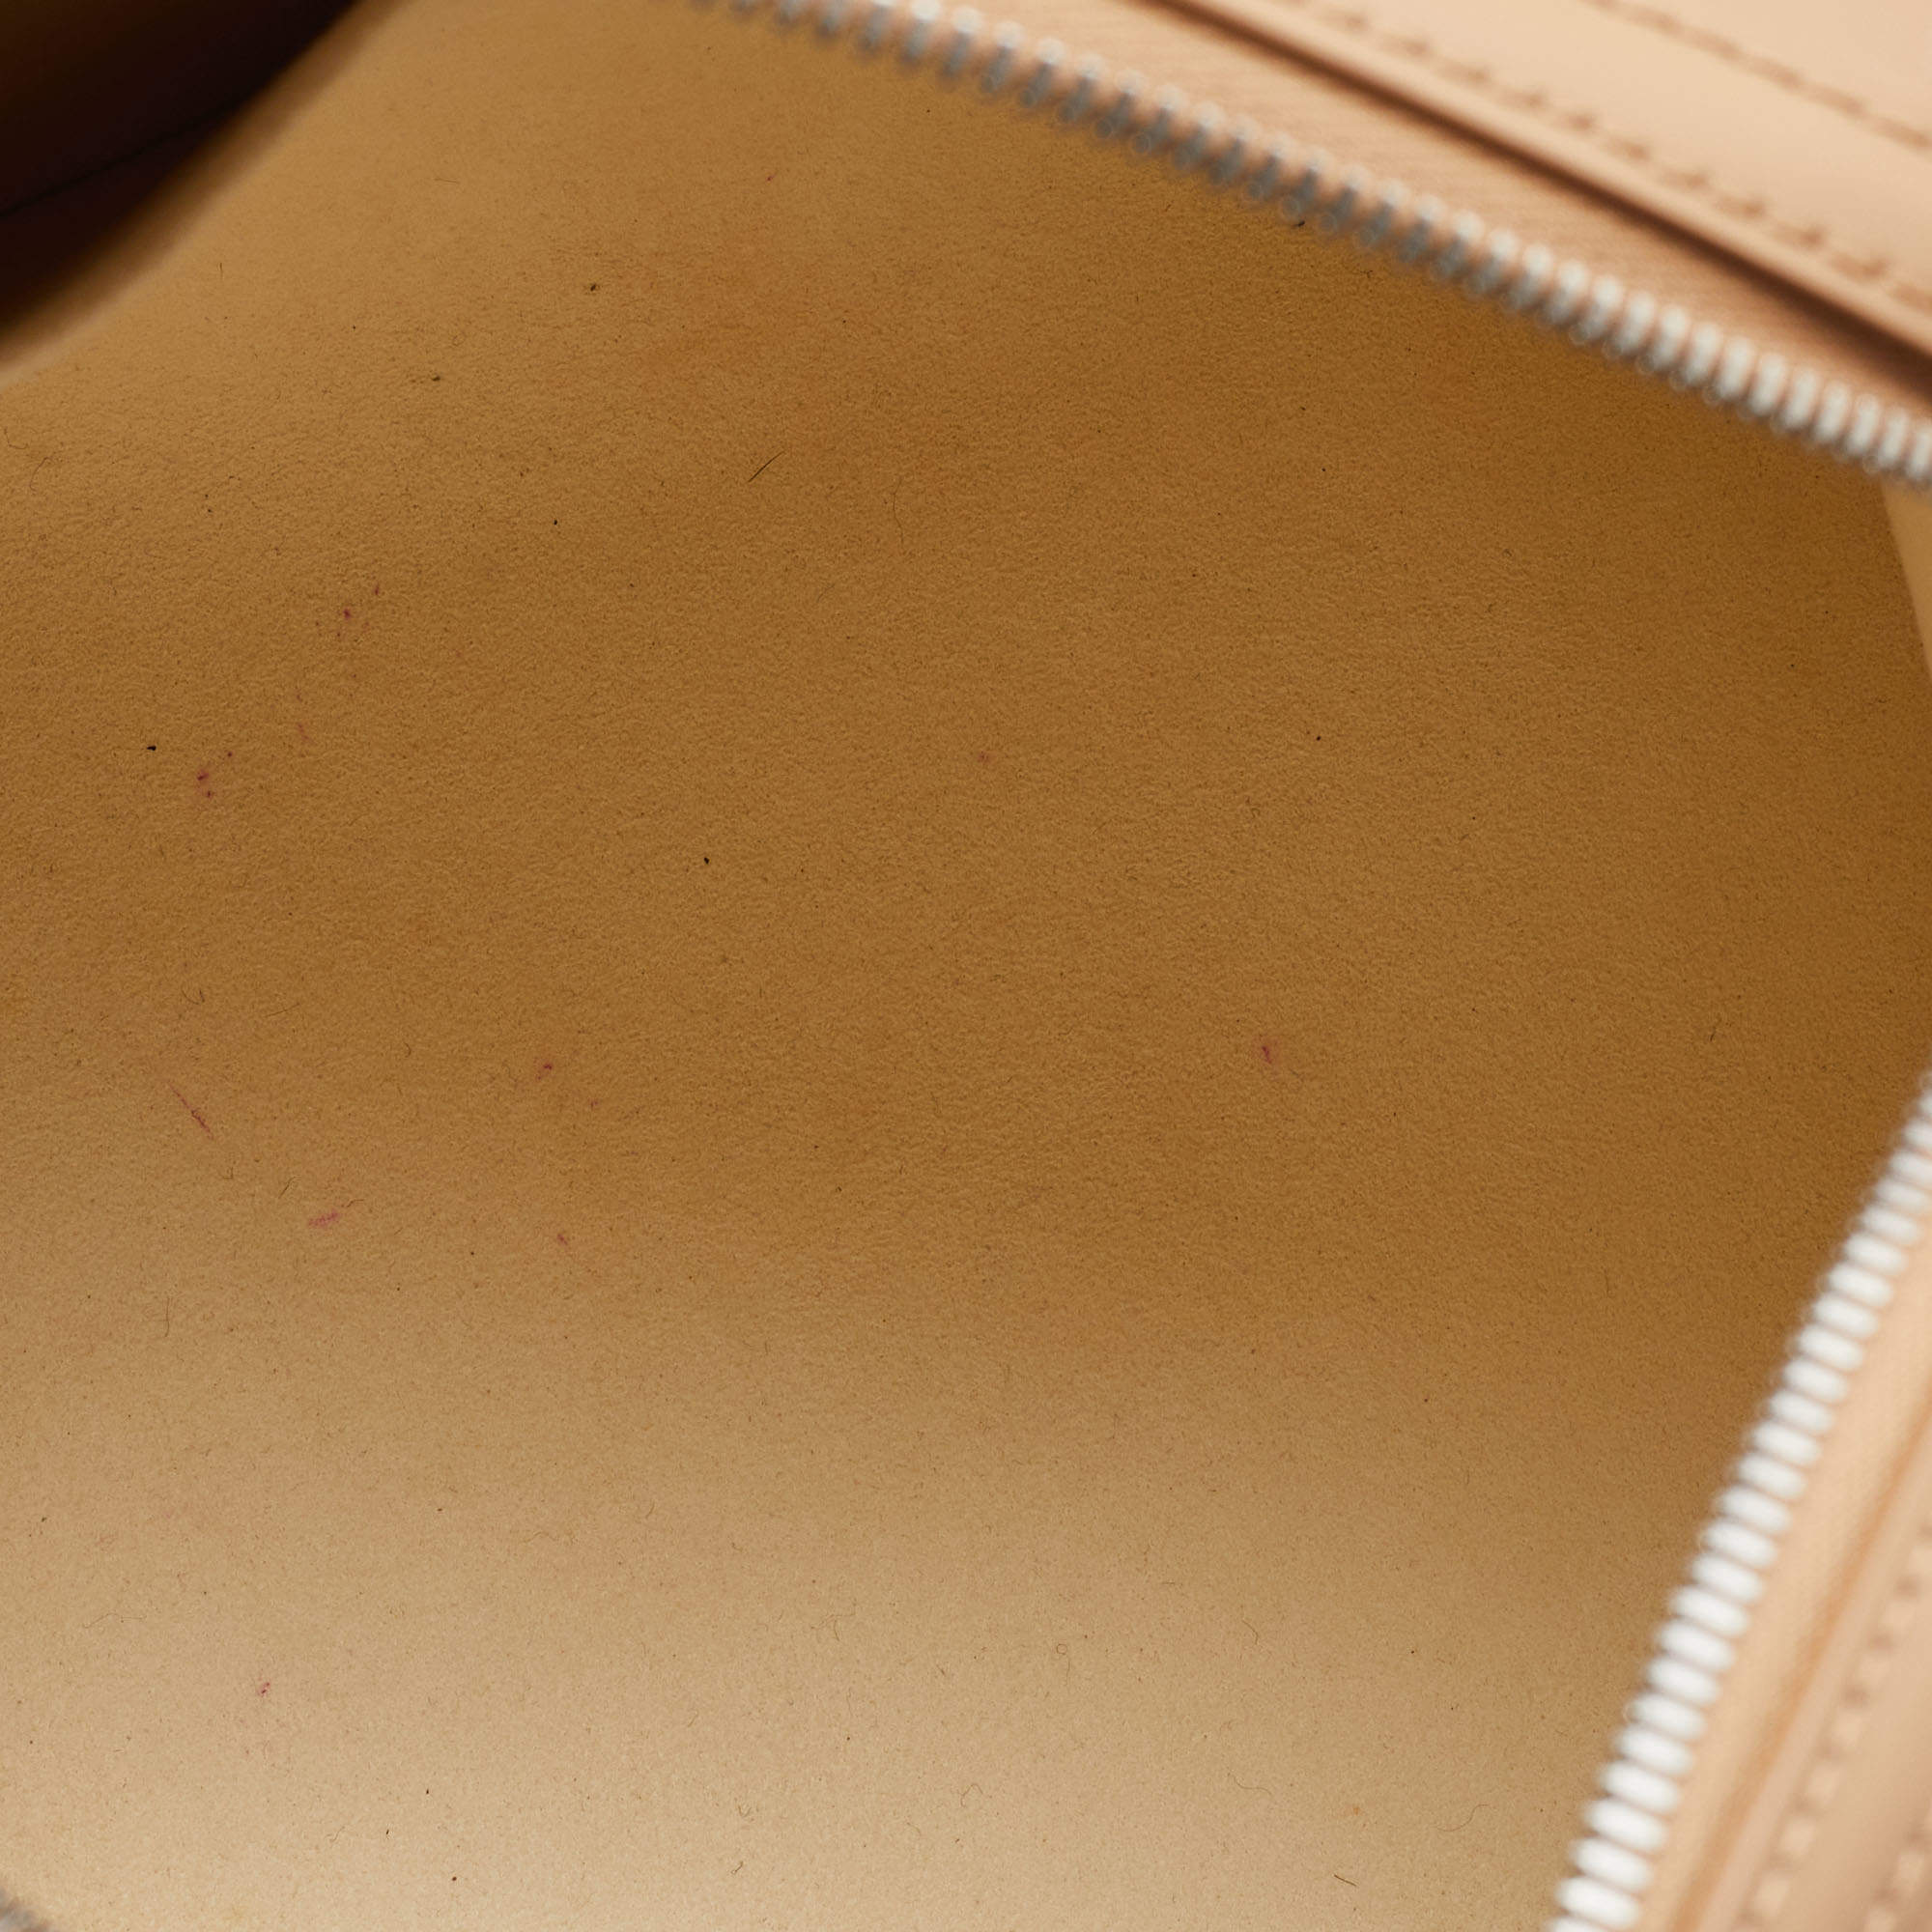 LOUIS VUITTON Handbag M48905 beige leather Damier ・ facet Speedy cube MM  used